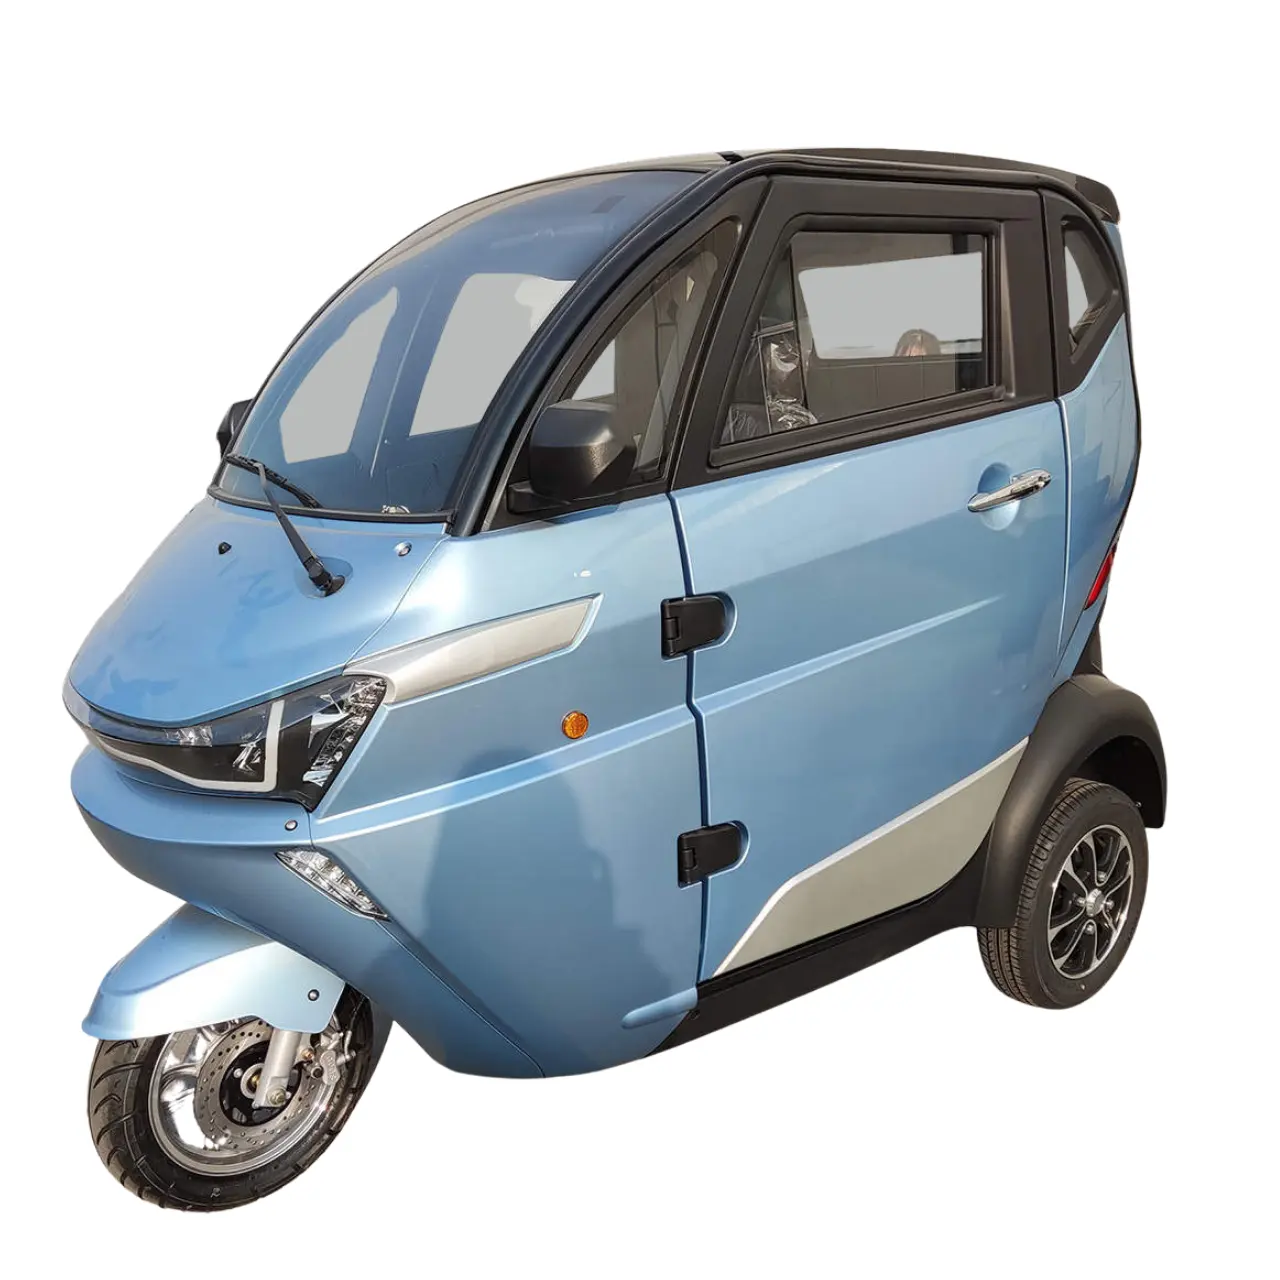 Minifurgoneta eléctrica de cuatro ruedas de venta directa de fabricante profesional de China para adultos